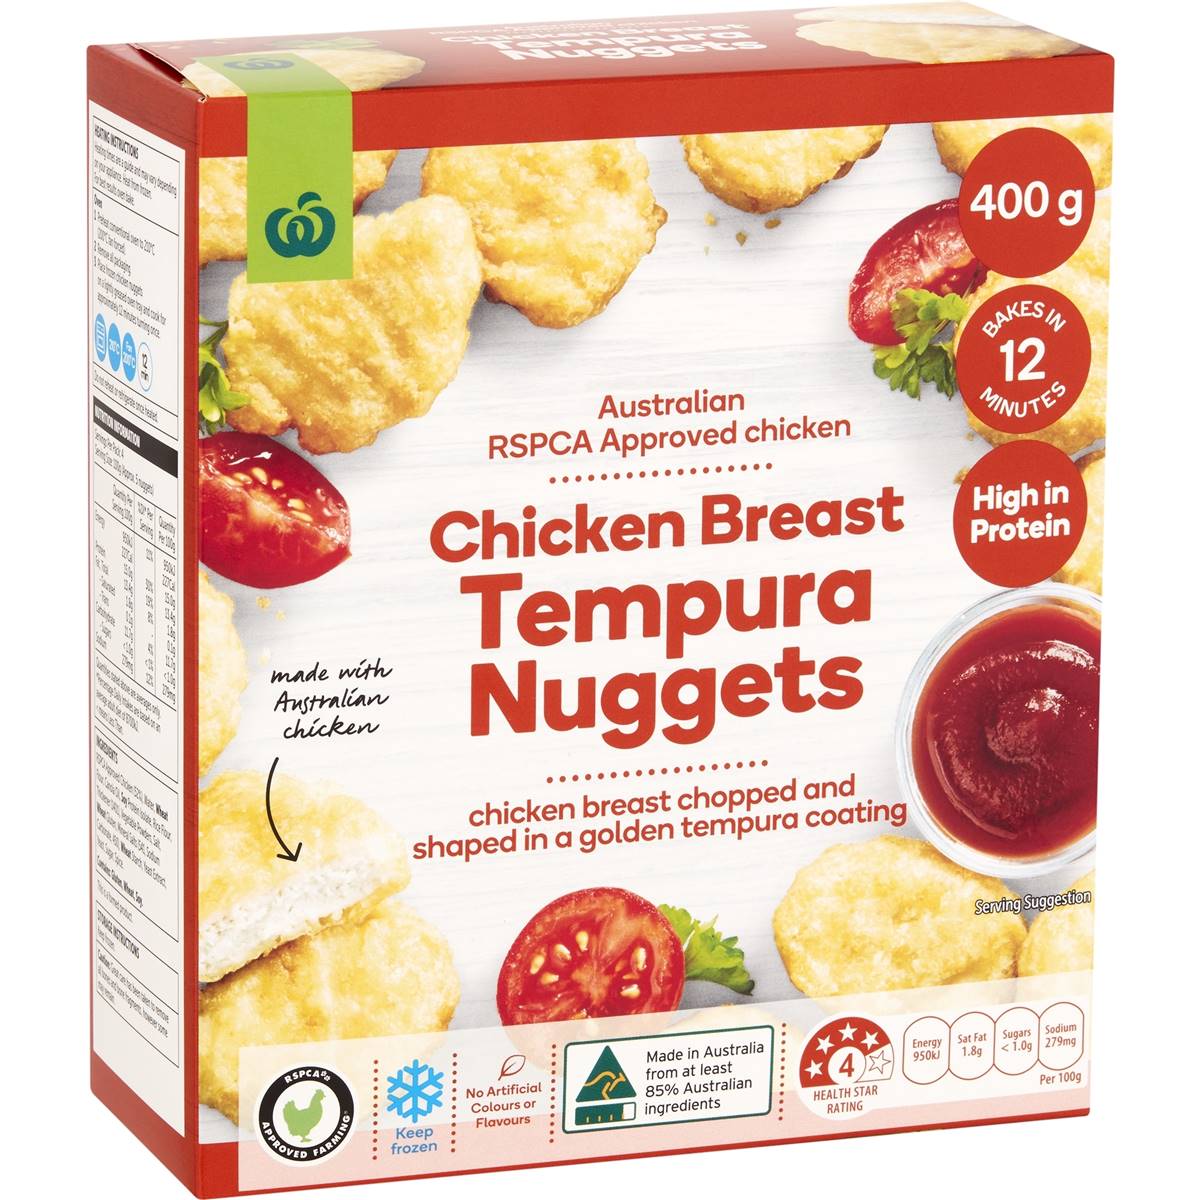 Calories in Woolworths Chicken Breast Tempura Nuggets